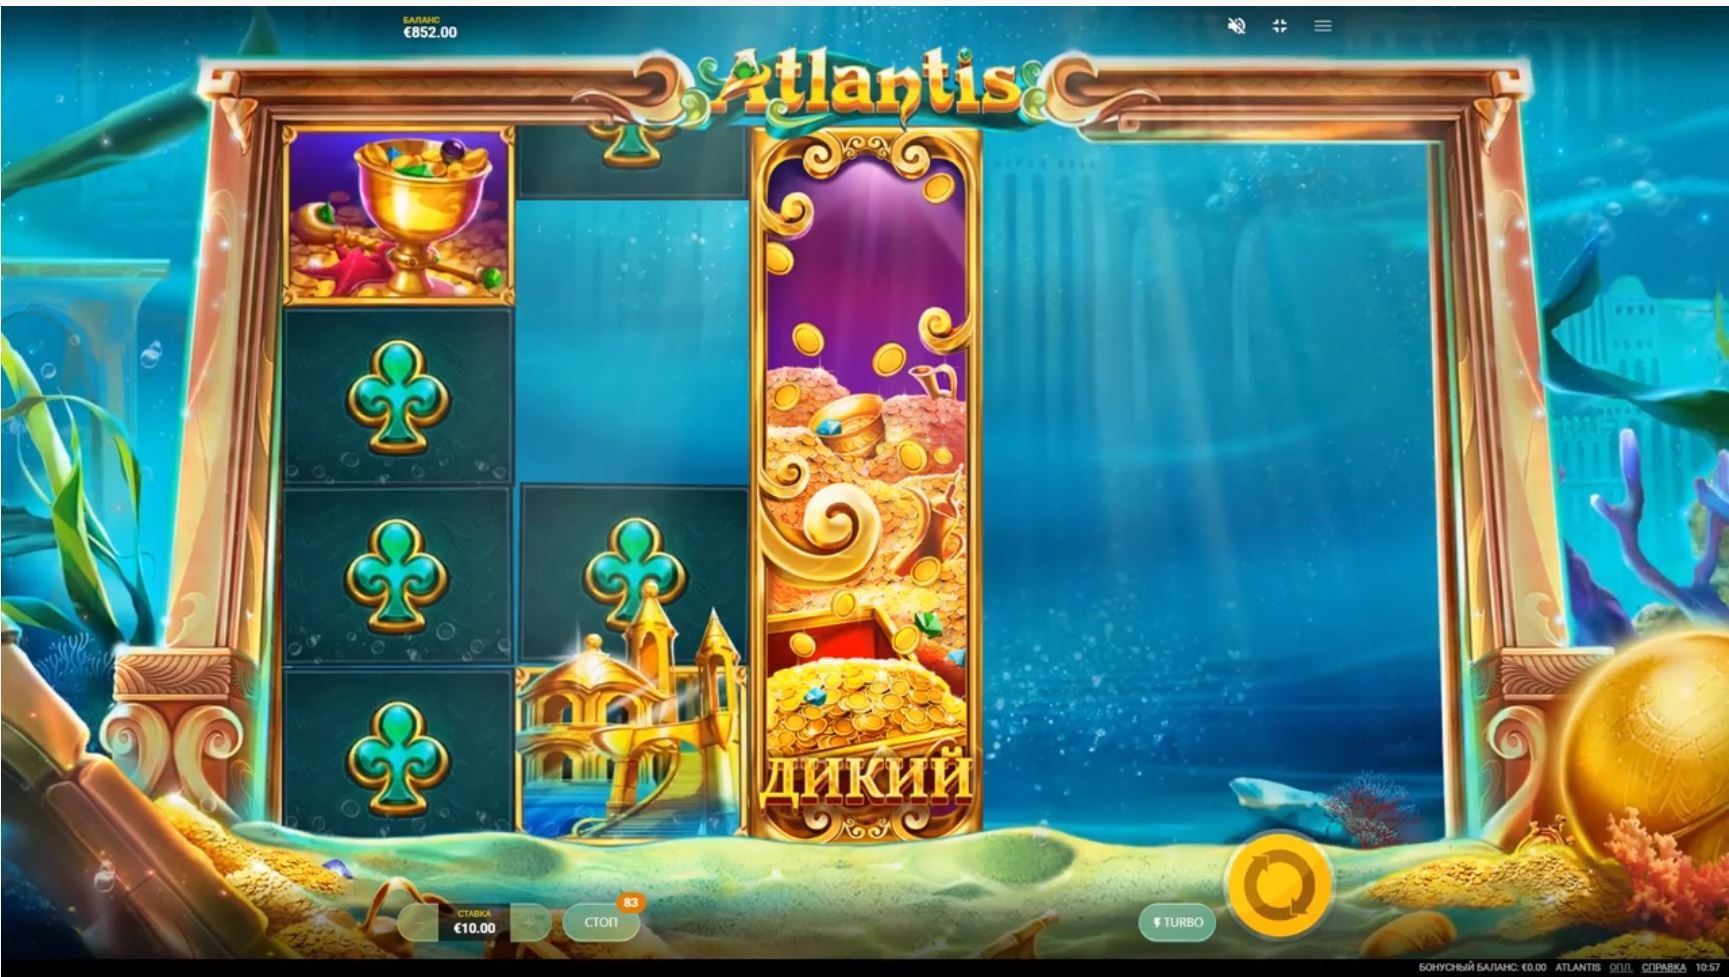 Atlantis gold slots